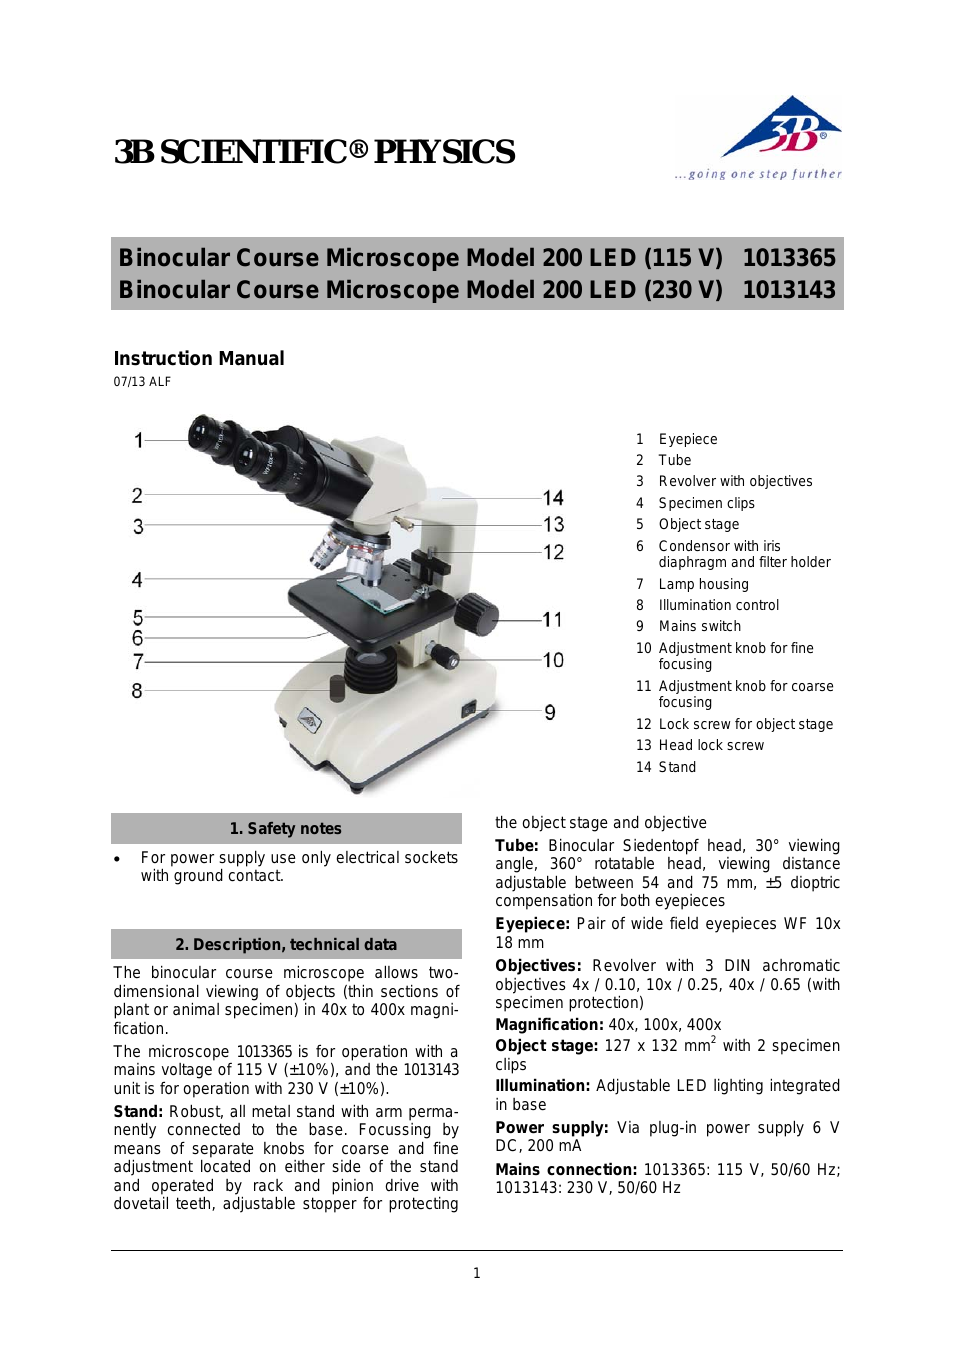 Binocular Course Microscope Model 200 LED (230 V, 50__60 Hz)